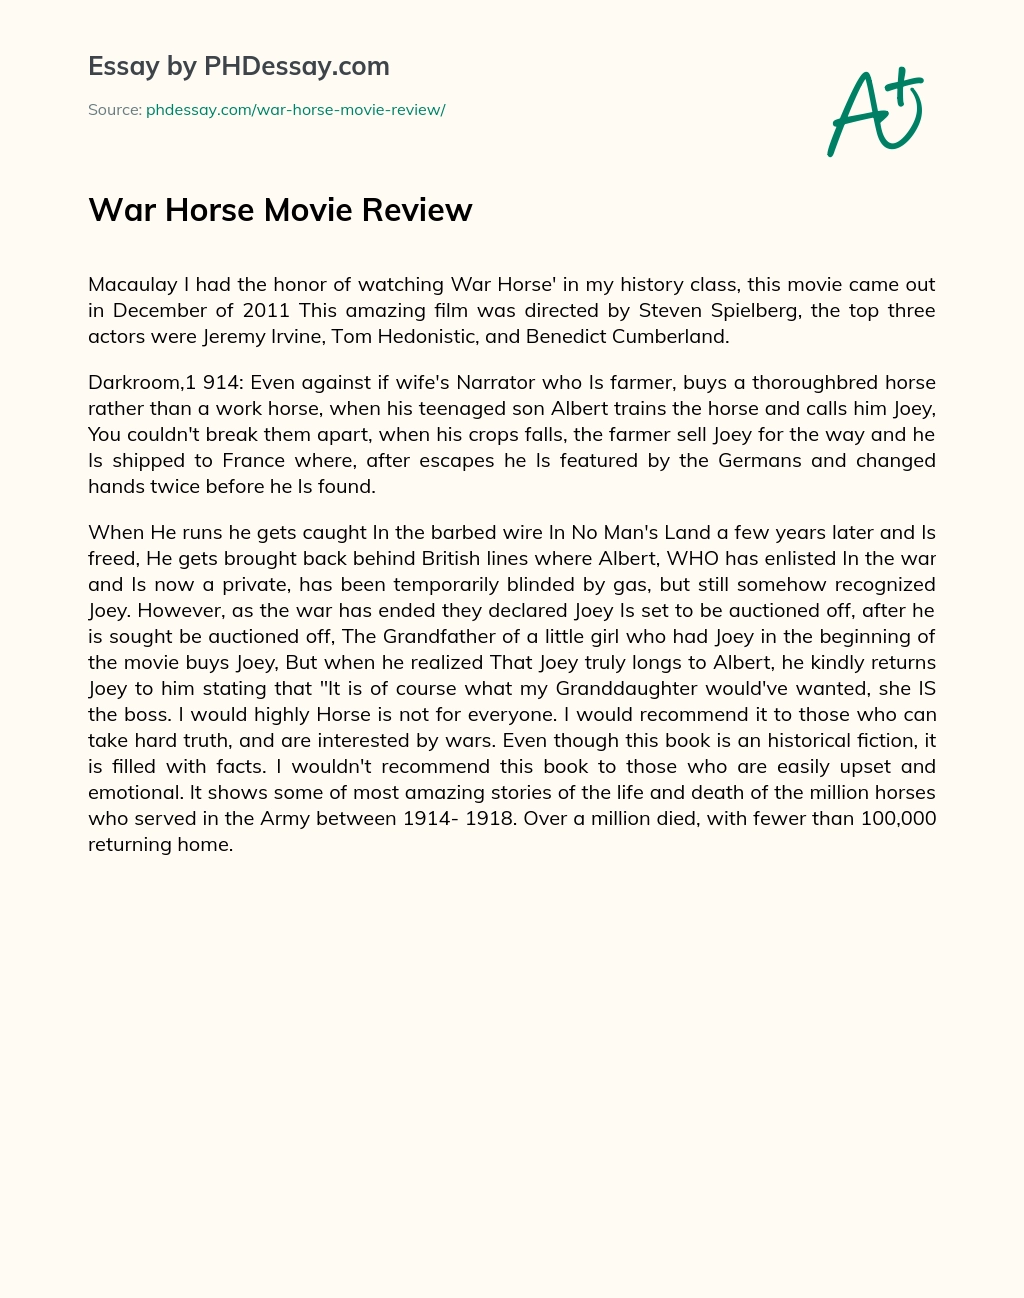 War Horse Movie Review essay